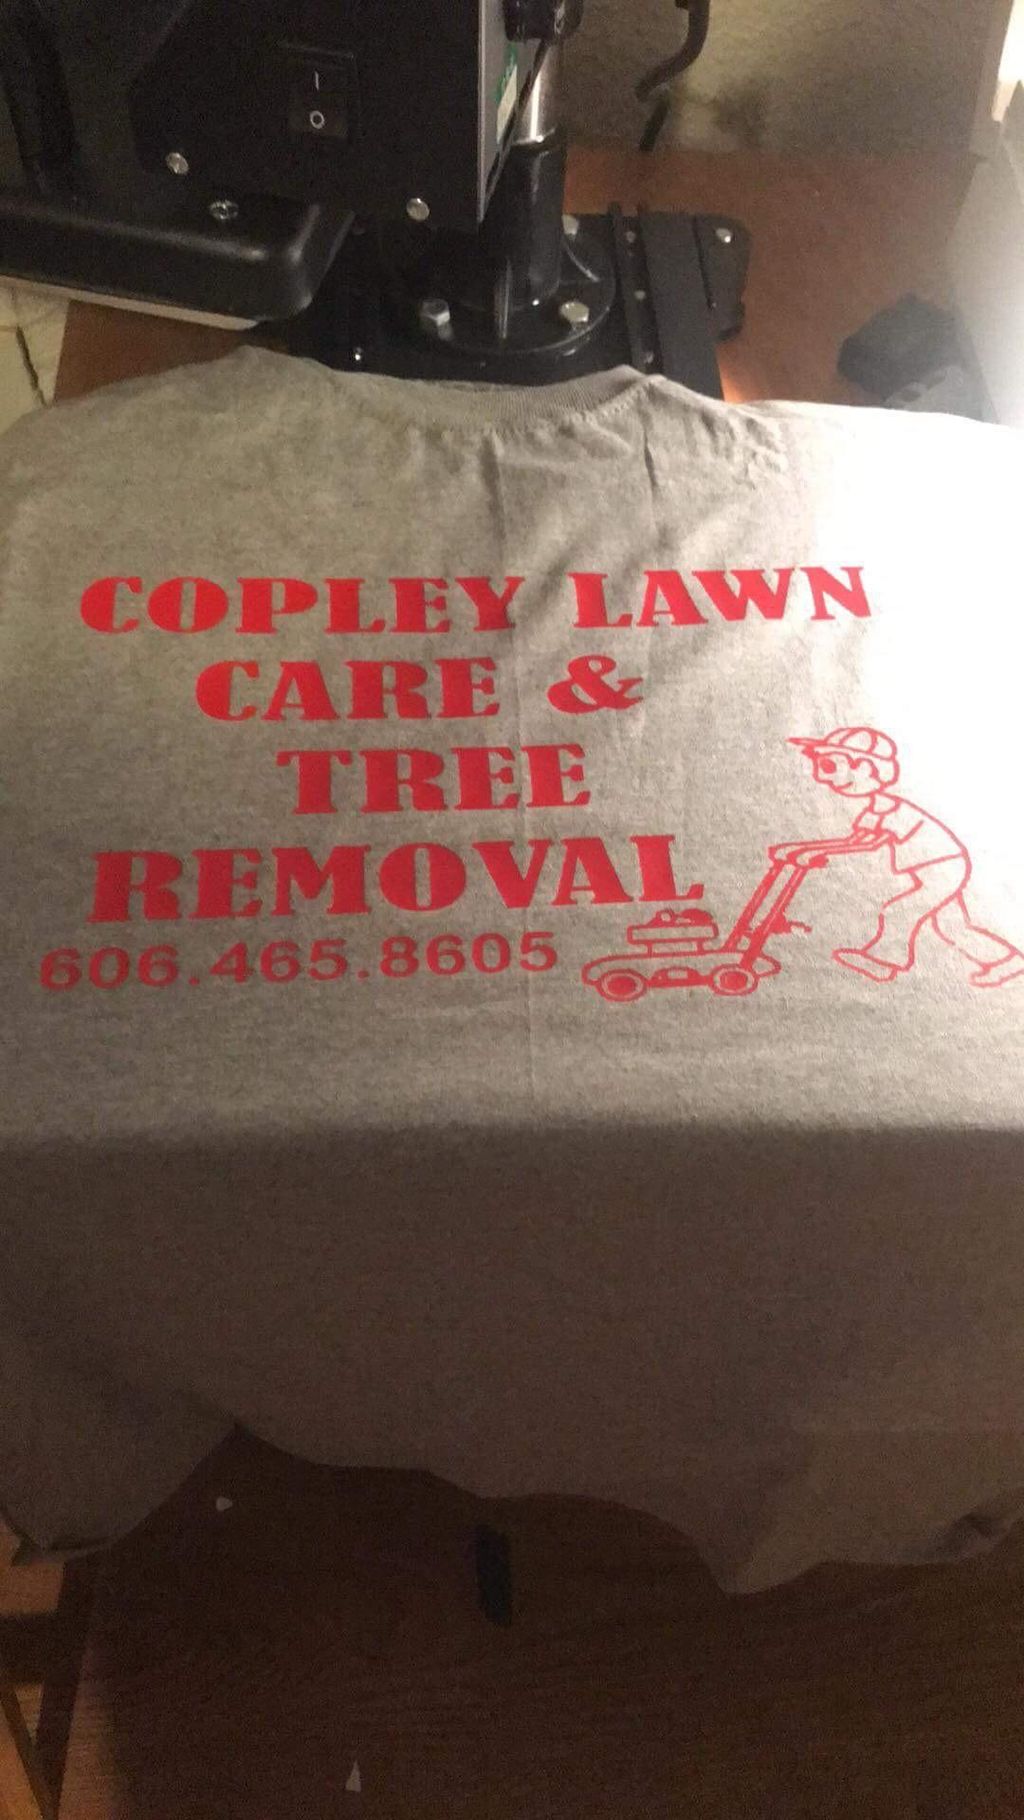 Copley lawn care & tree removal